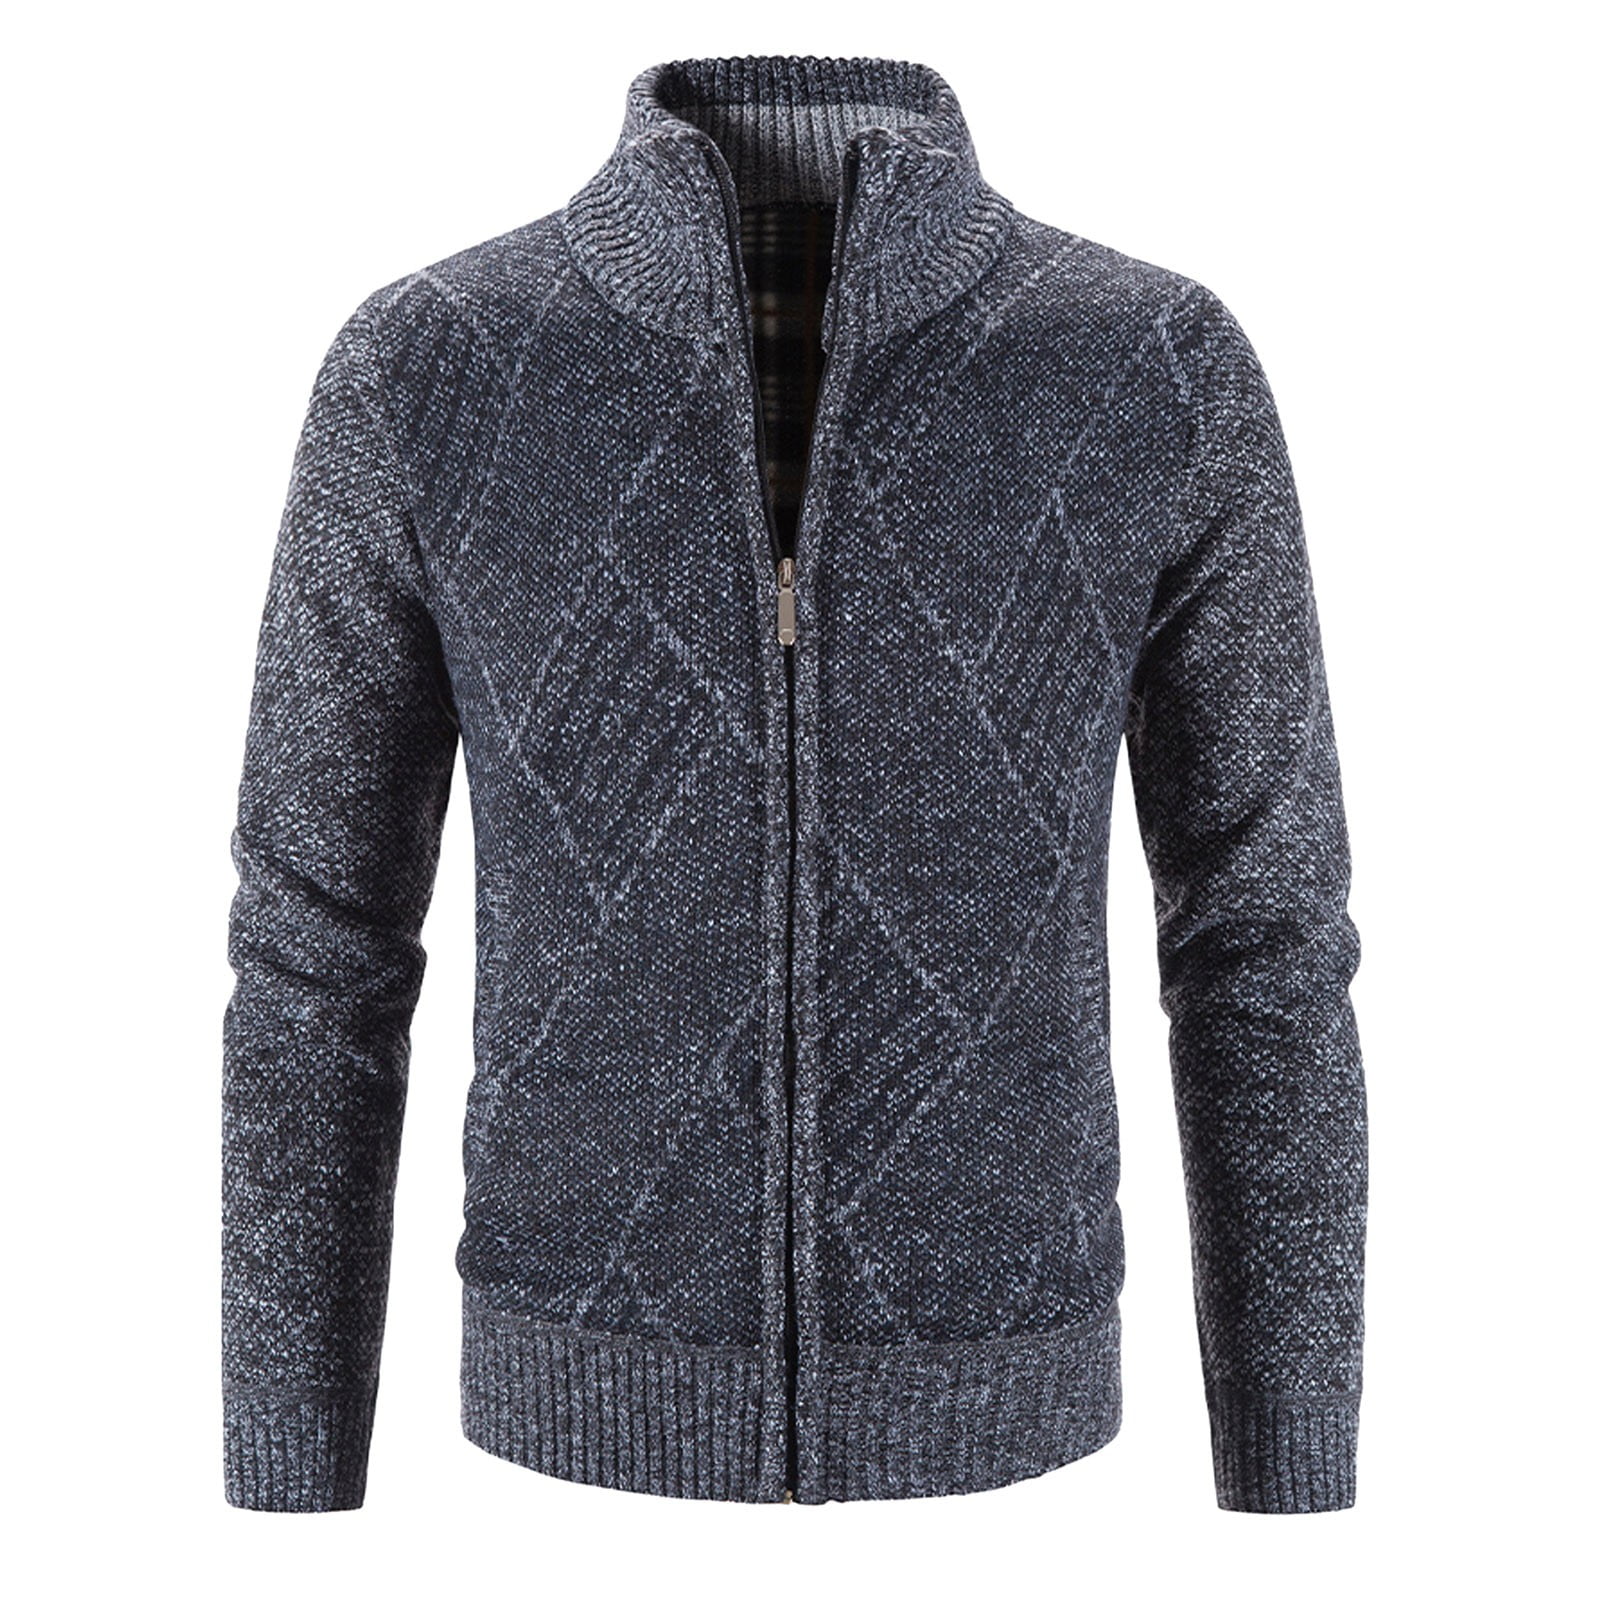 Zizocwa Office Essentials for Men Mens Light Hooded Jacket Men's Winter Sweater Jacket Fashion Long-sleeved Plus Velvet Thick High-Neck Diamond Block